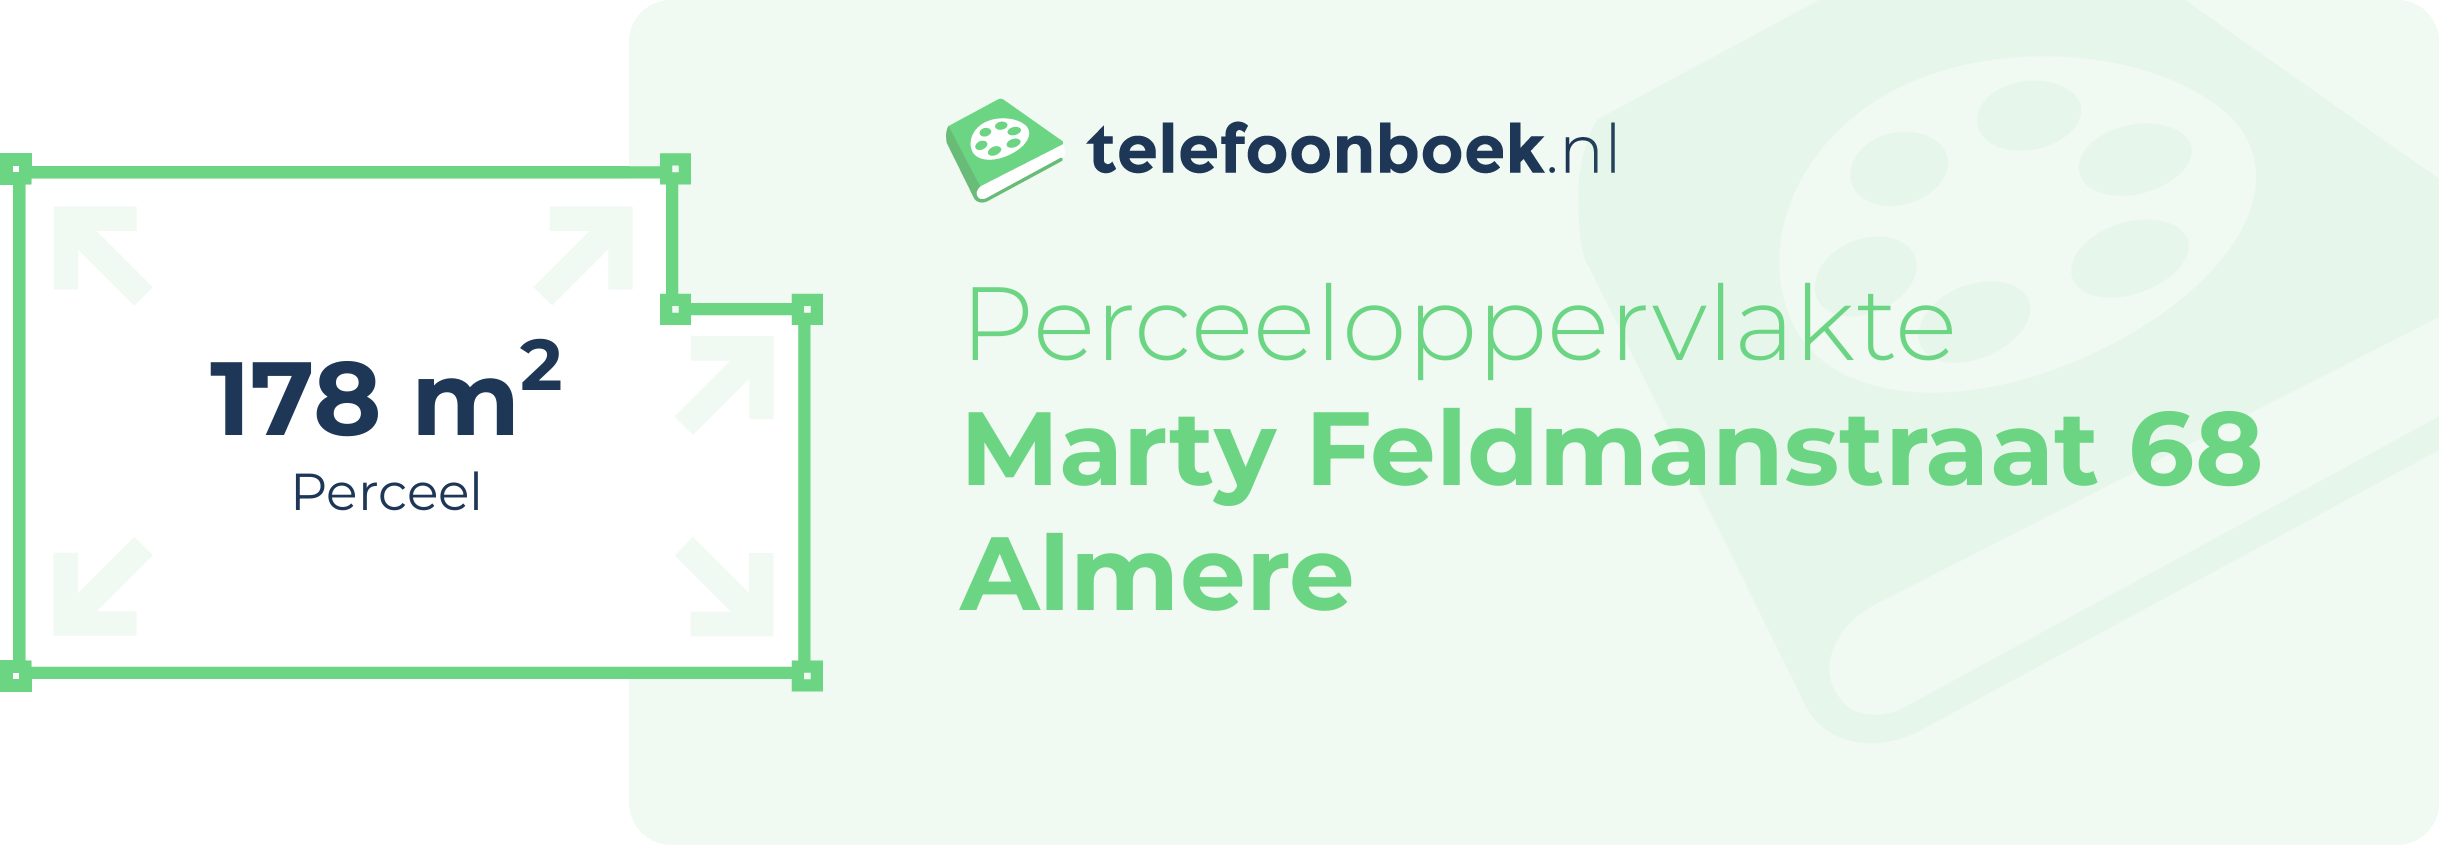 Perceeloppervlakte Marty Feldmanstraat 68 Almere